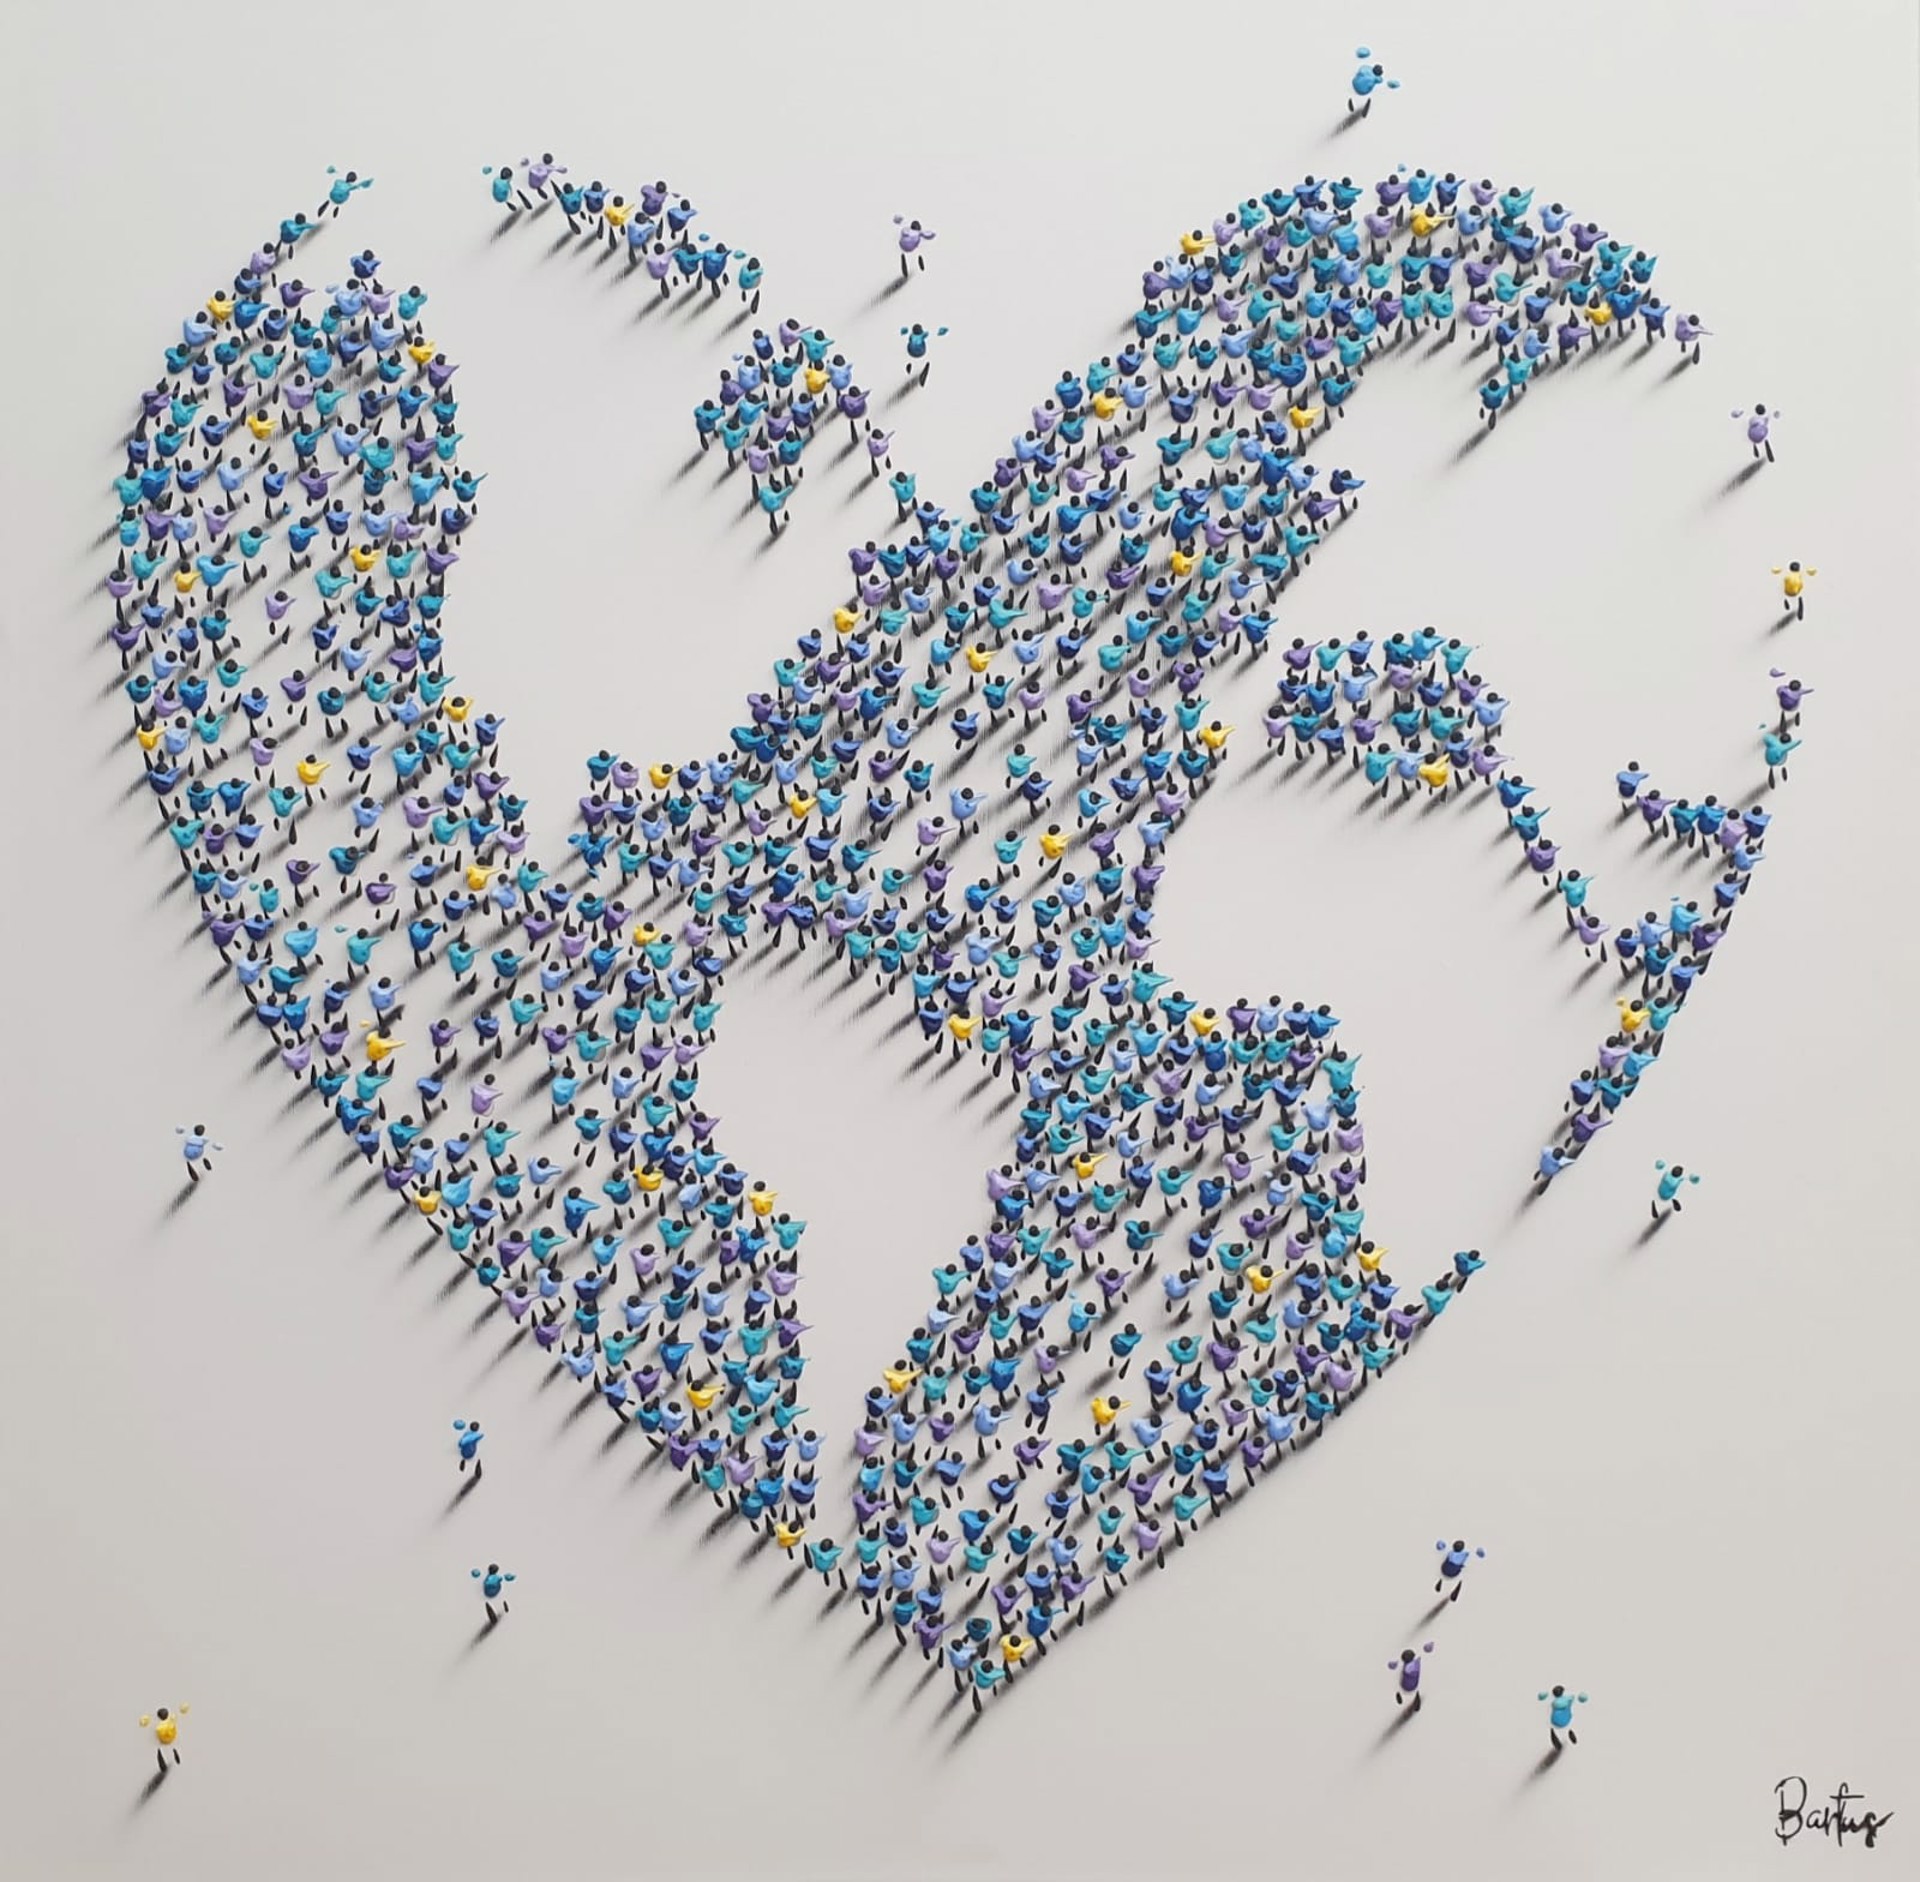 Heart World Map by Francisco Bartus